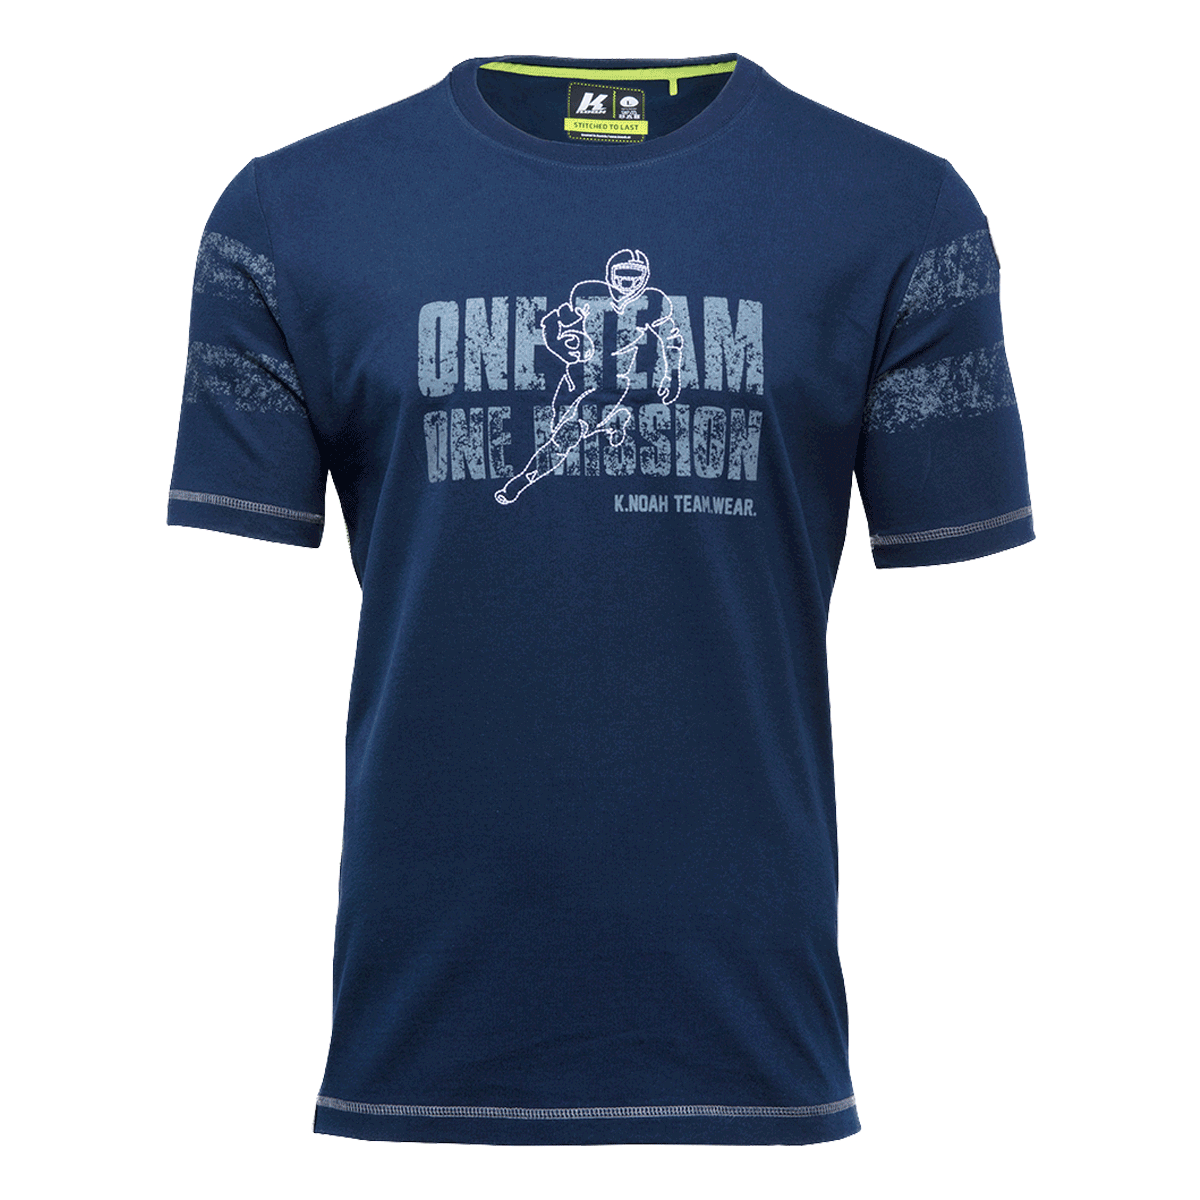 T-Shirt_OneTeam-OneMission_navy